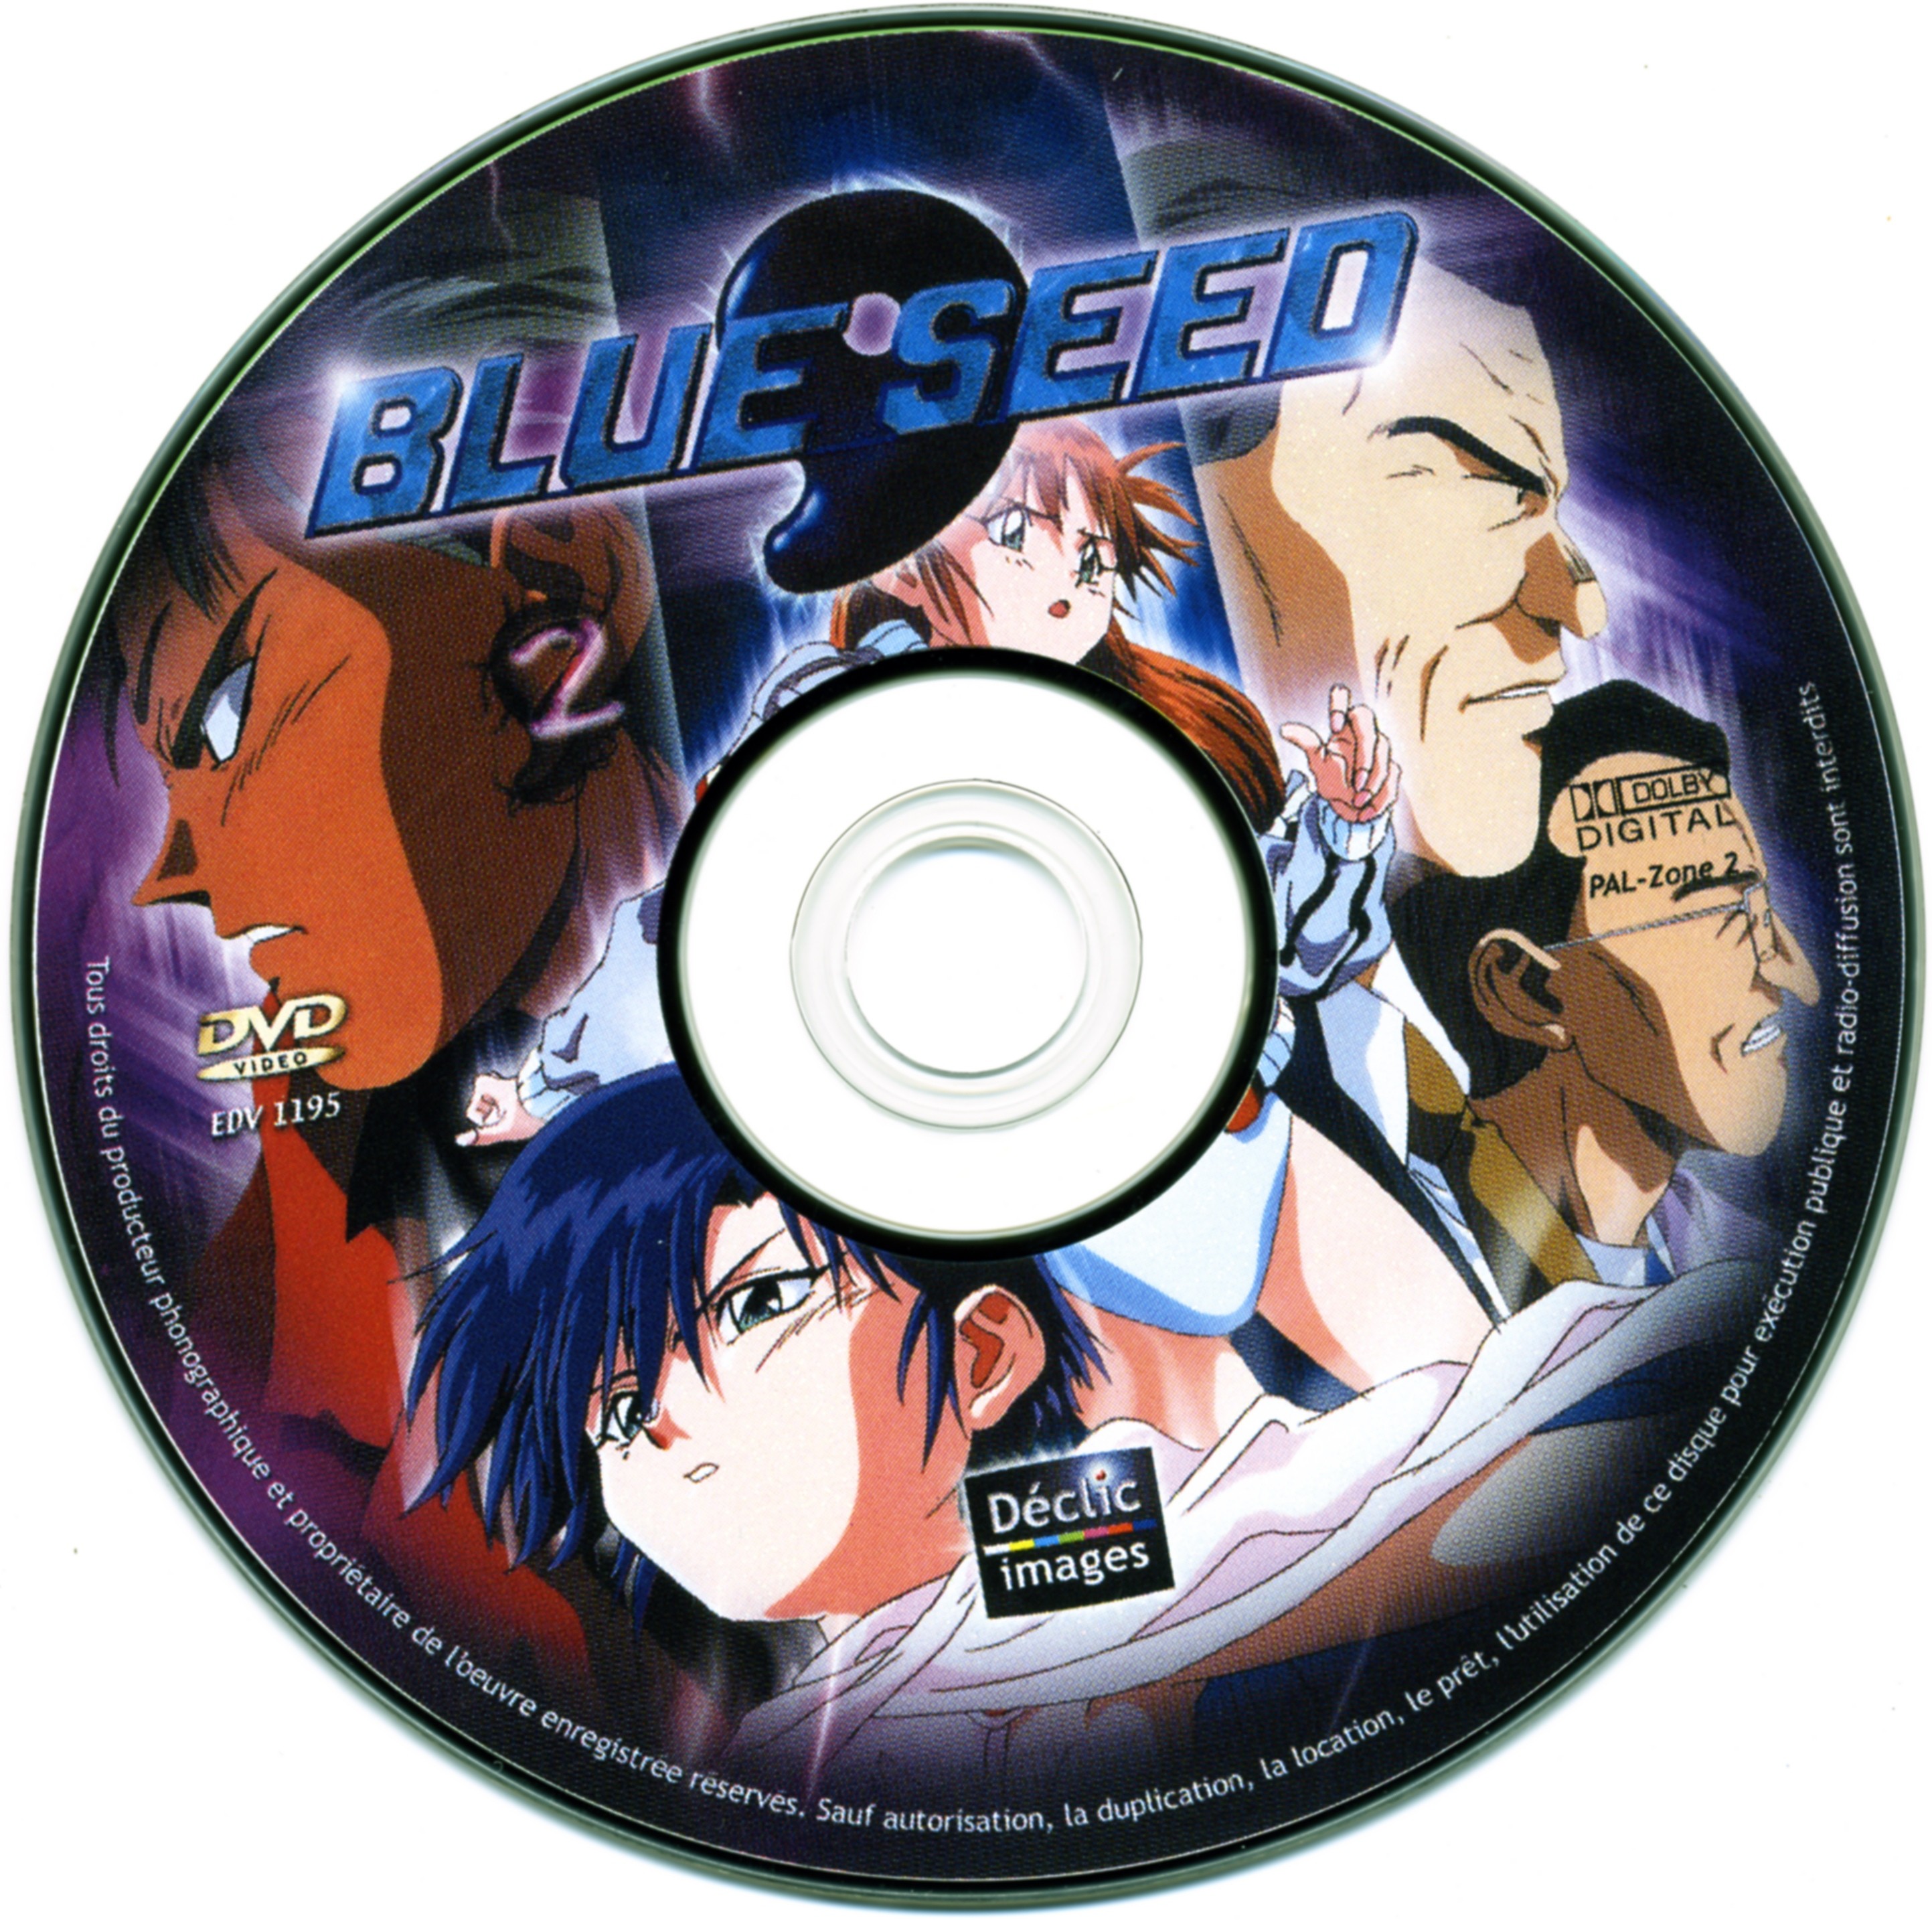 Blue seed vol 2